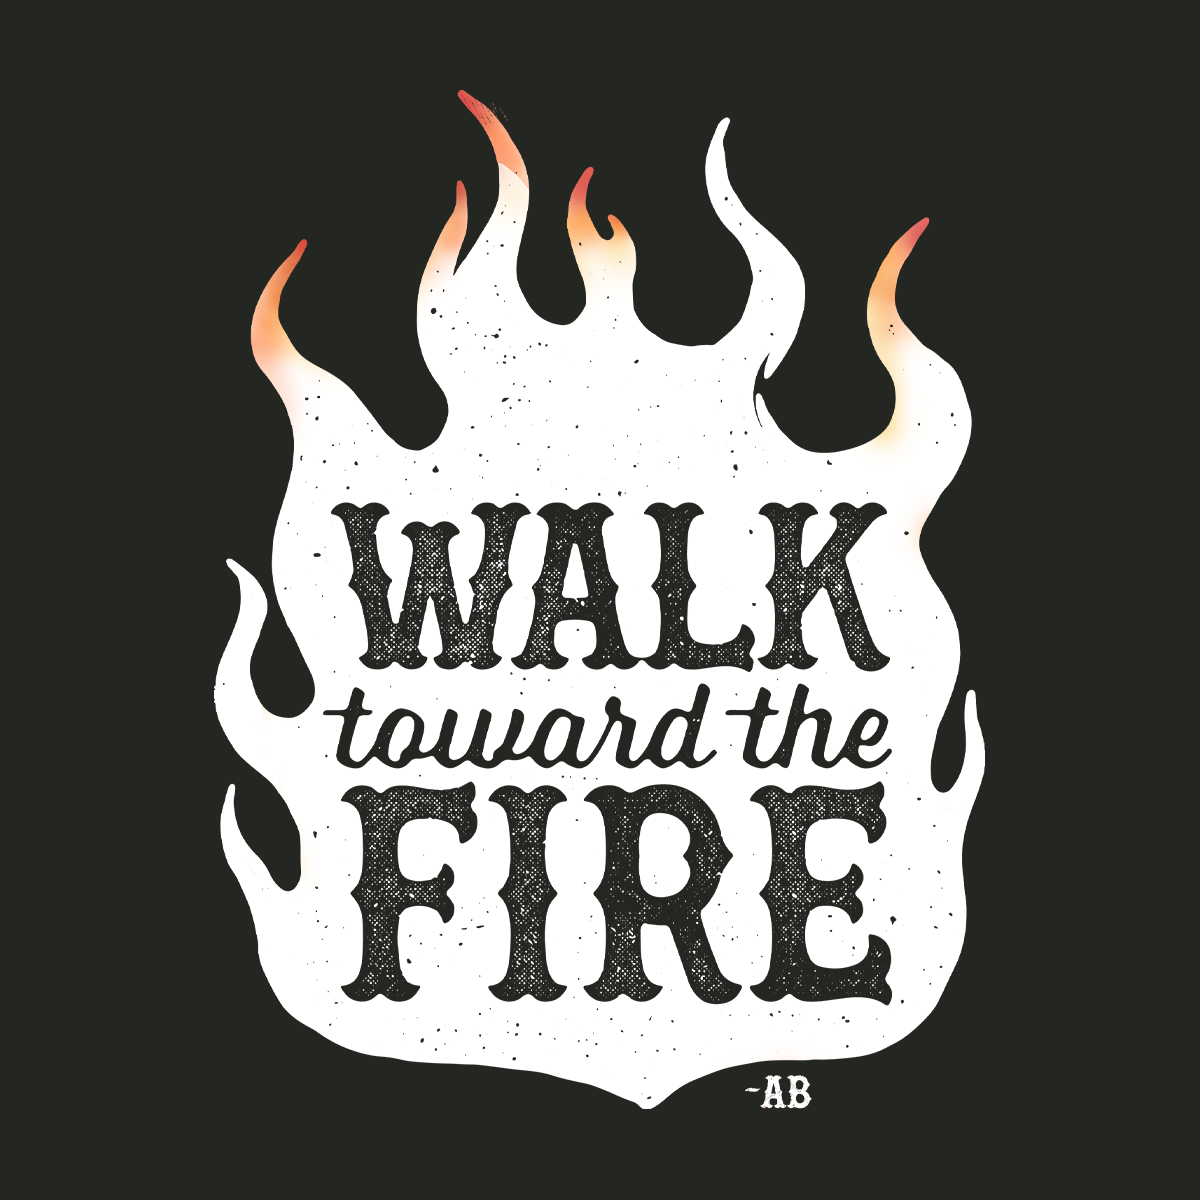 Walk Toward the Fire Long Sleeve T-Shirt - Black